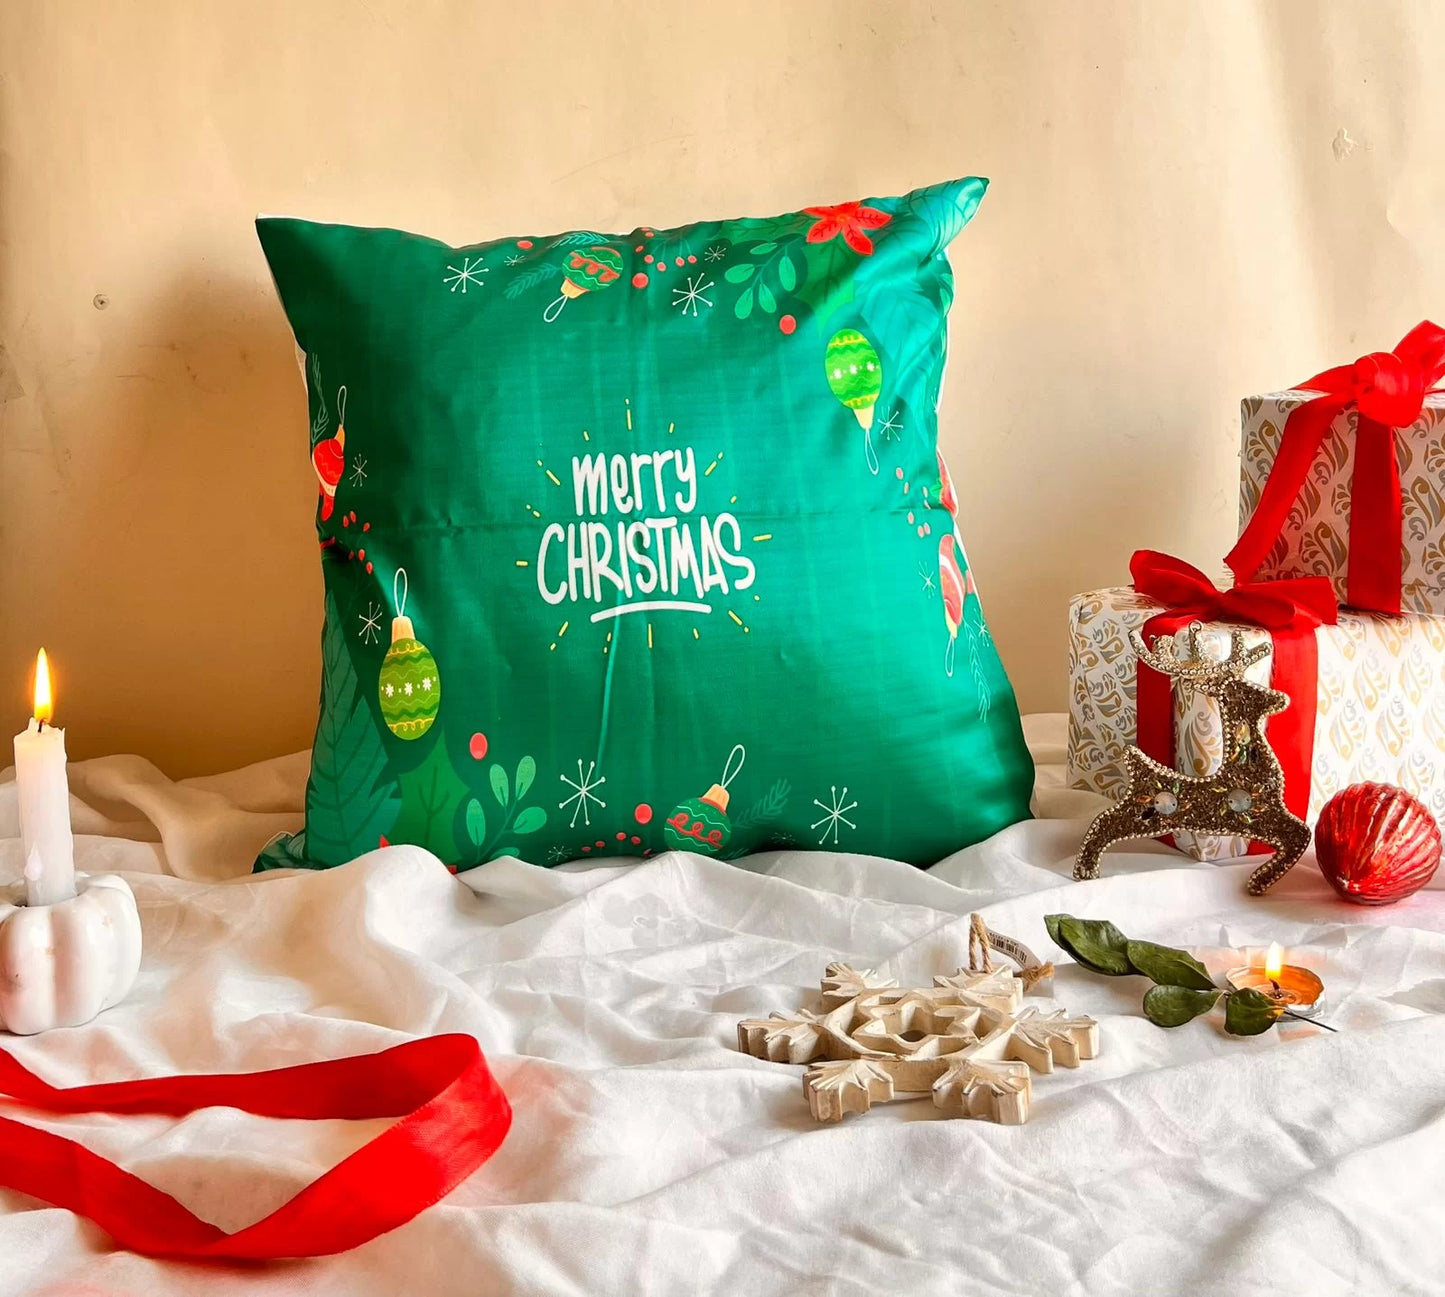 Merry Christmas Green cushion cover